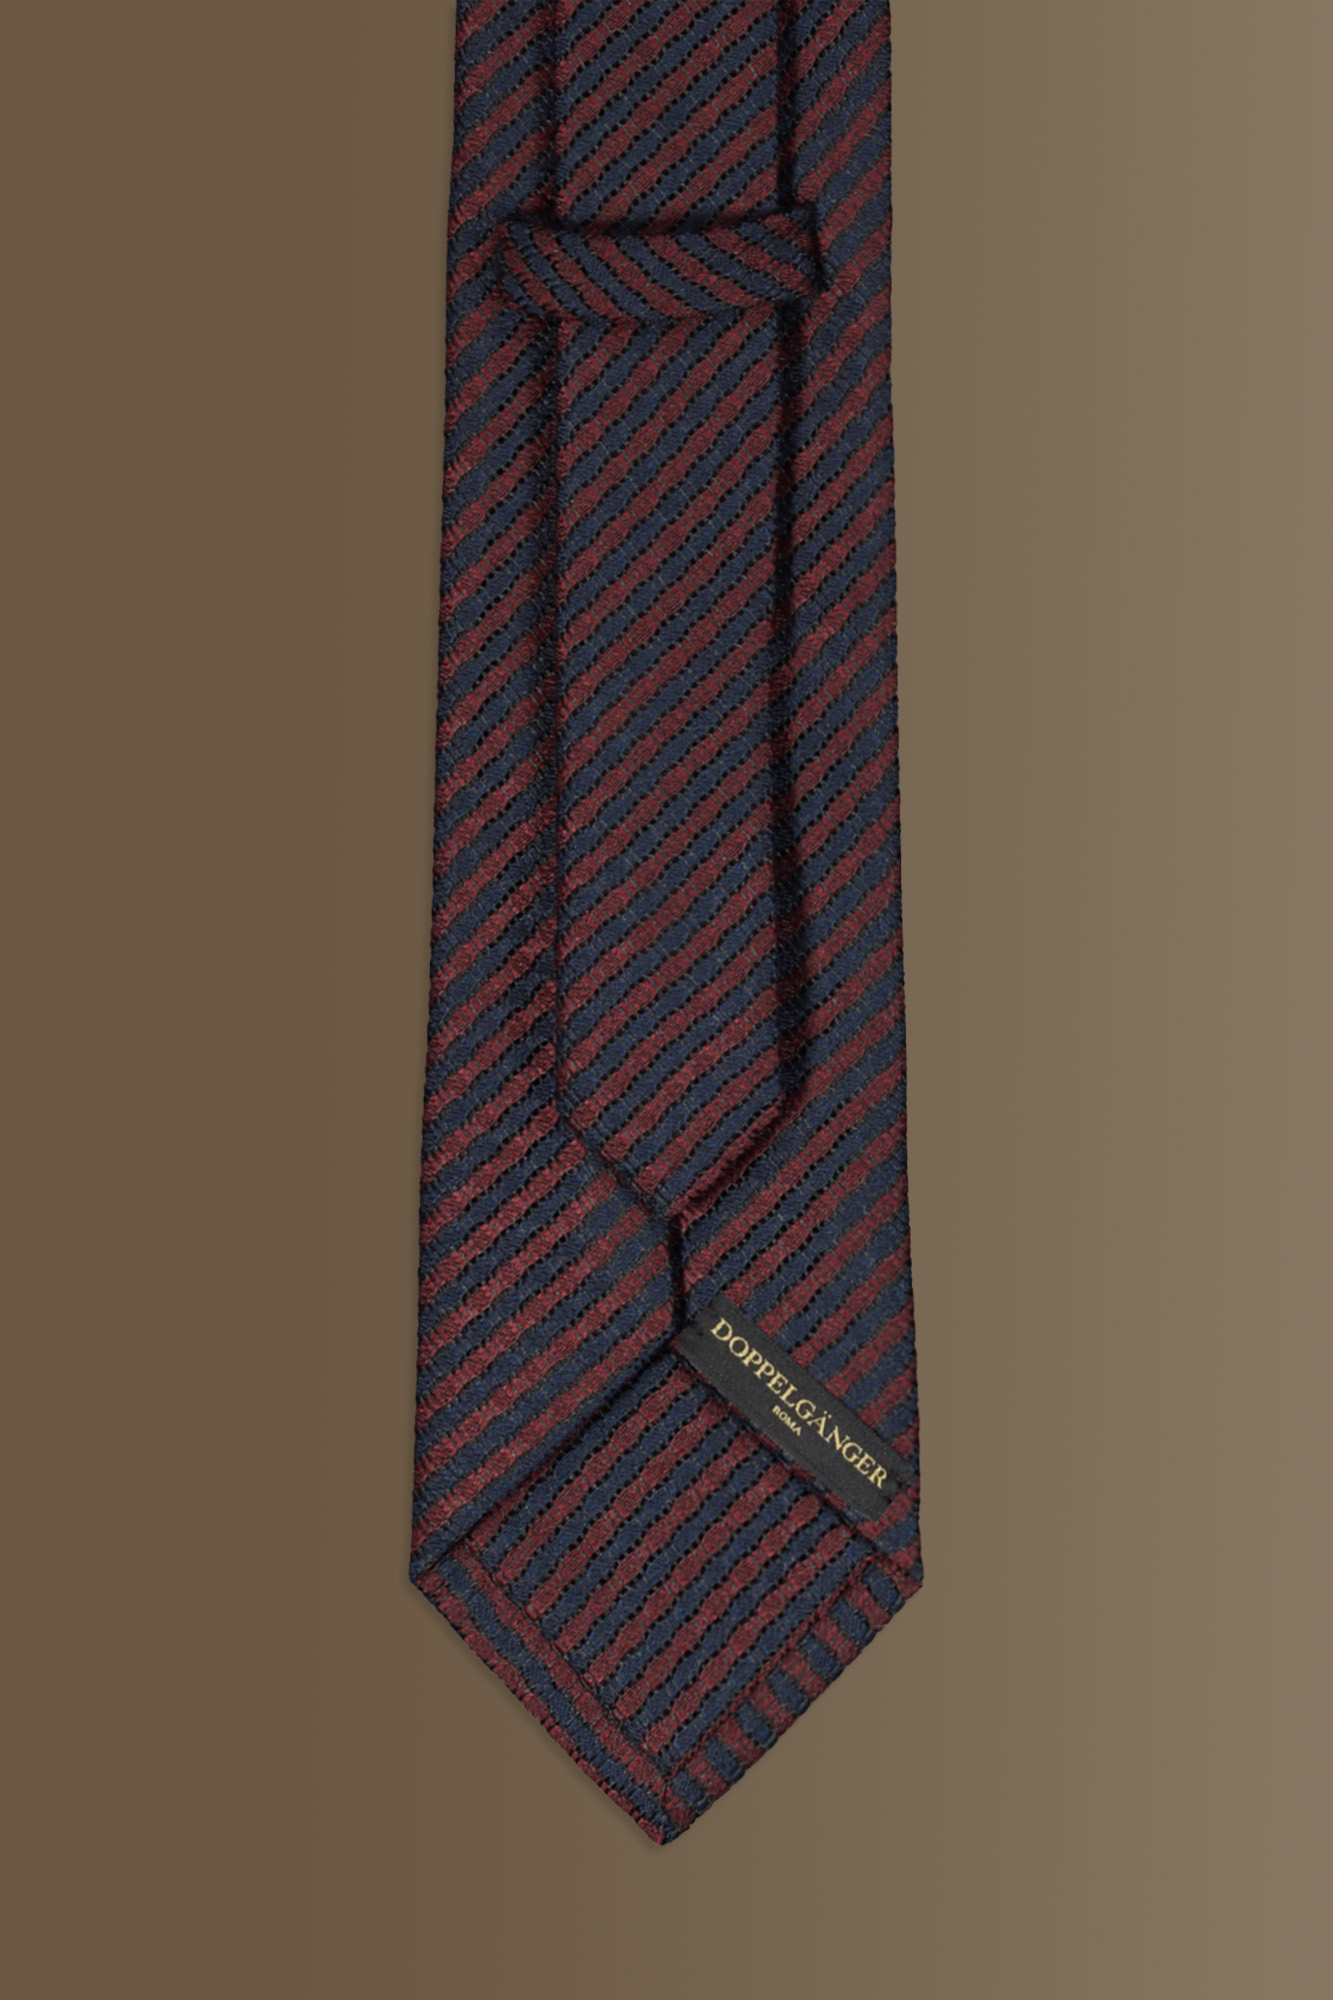 Cravatta uomo a righe blu misto bamboo regimental image number null